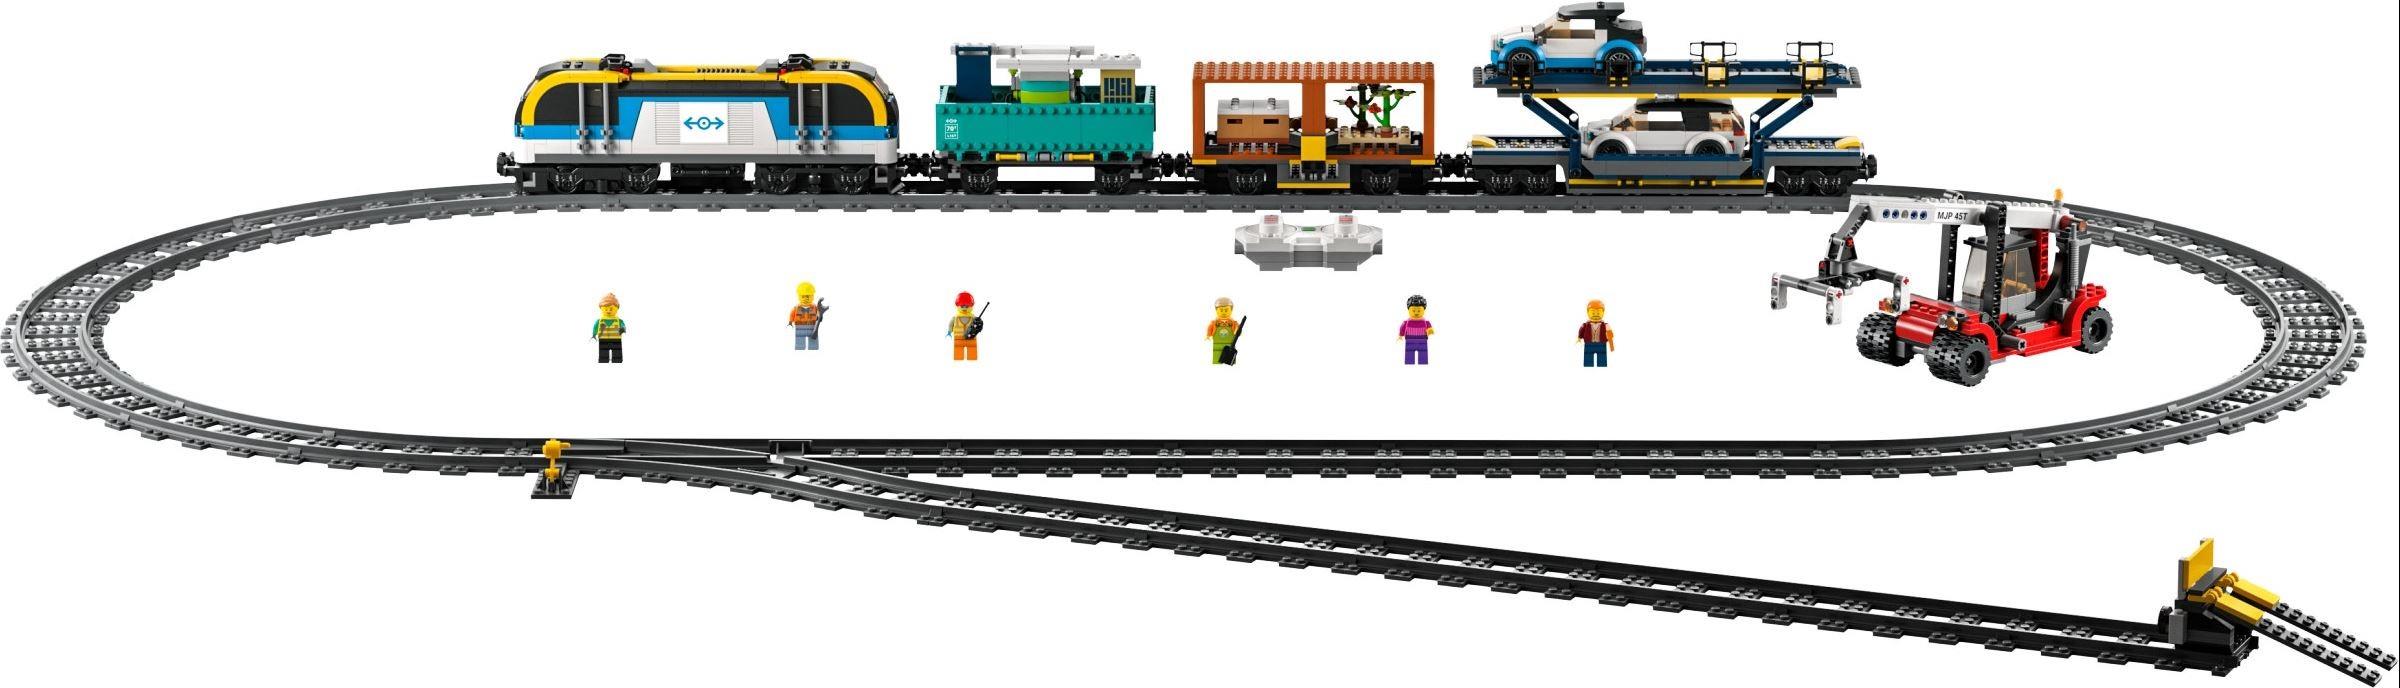 LEGO 60336 City Freight Train | BrickEconomy